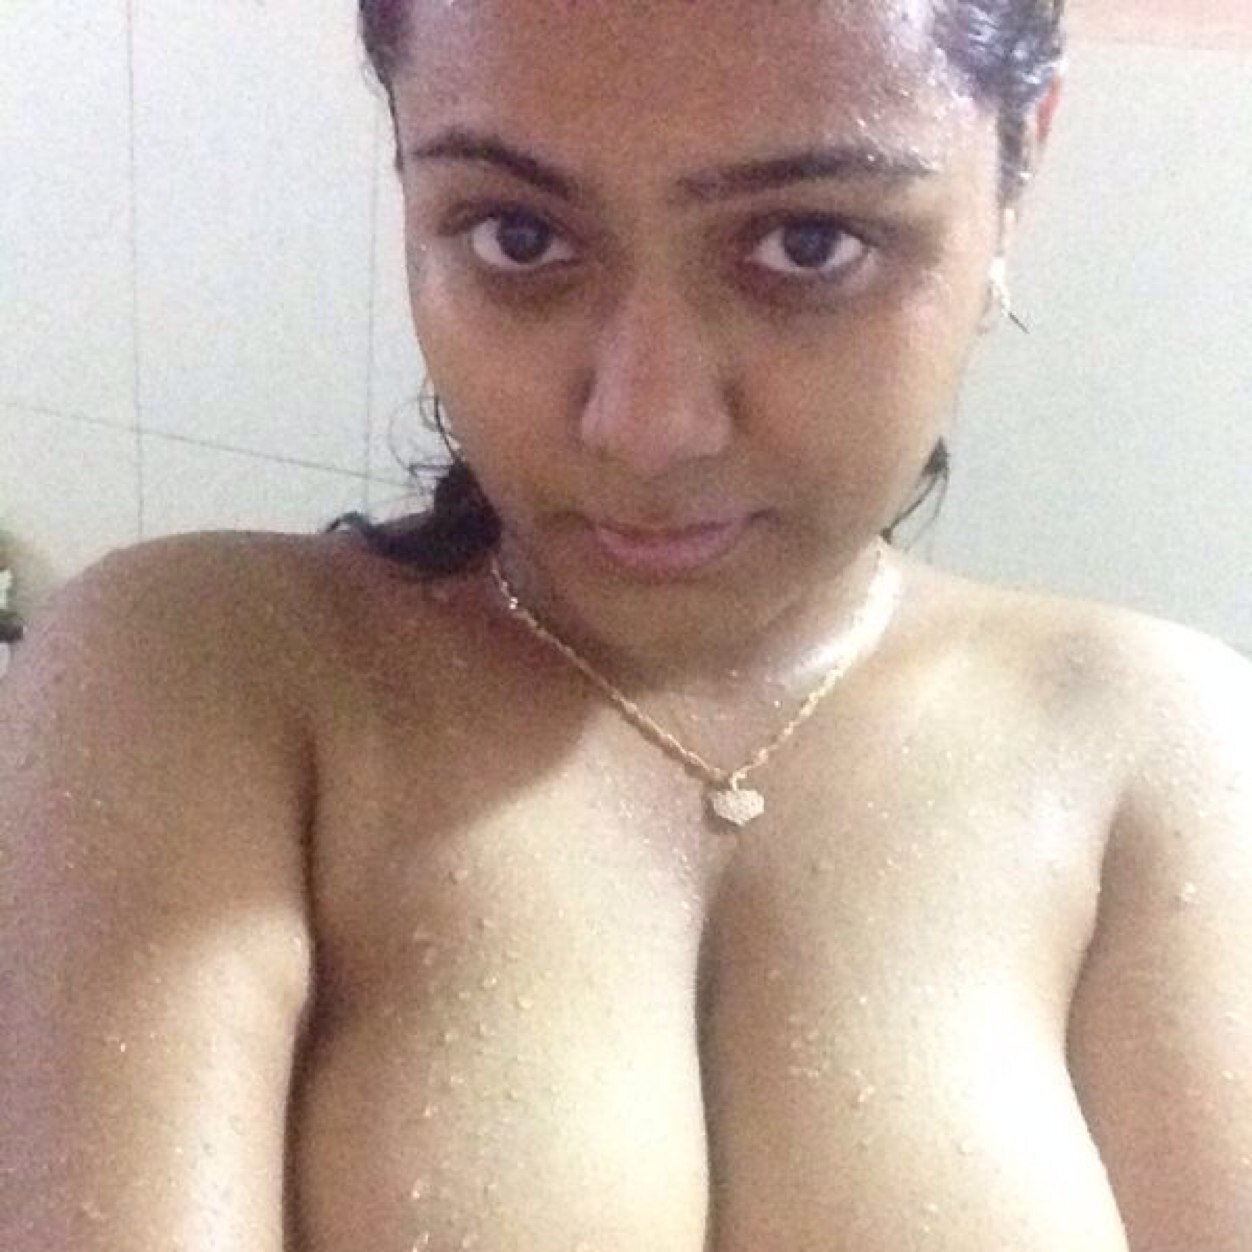 Pics nude free in Chennai